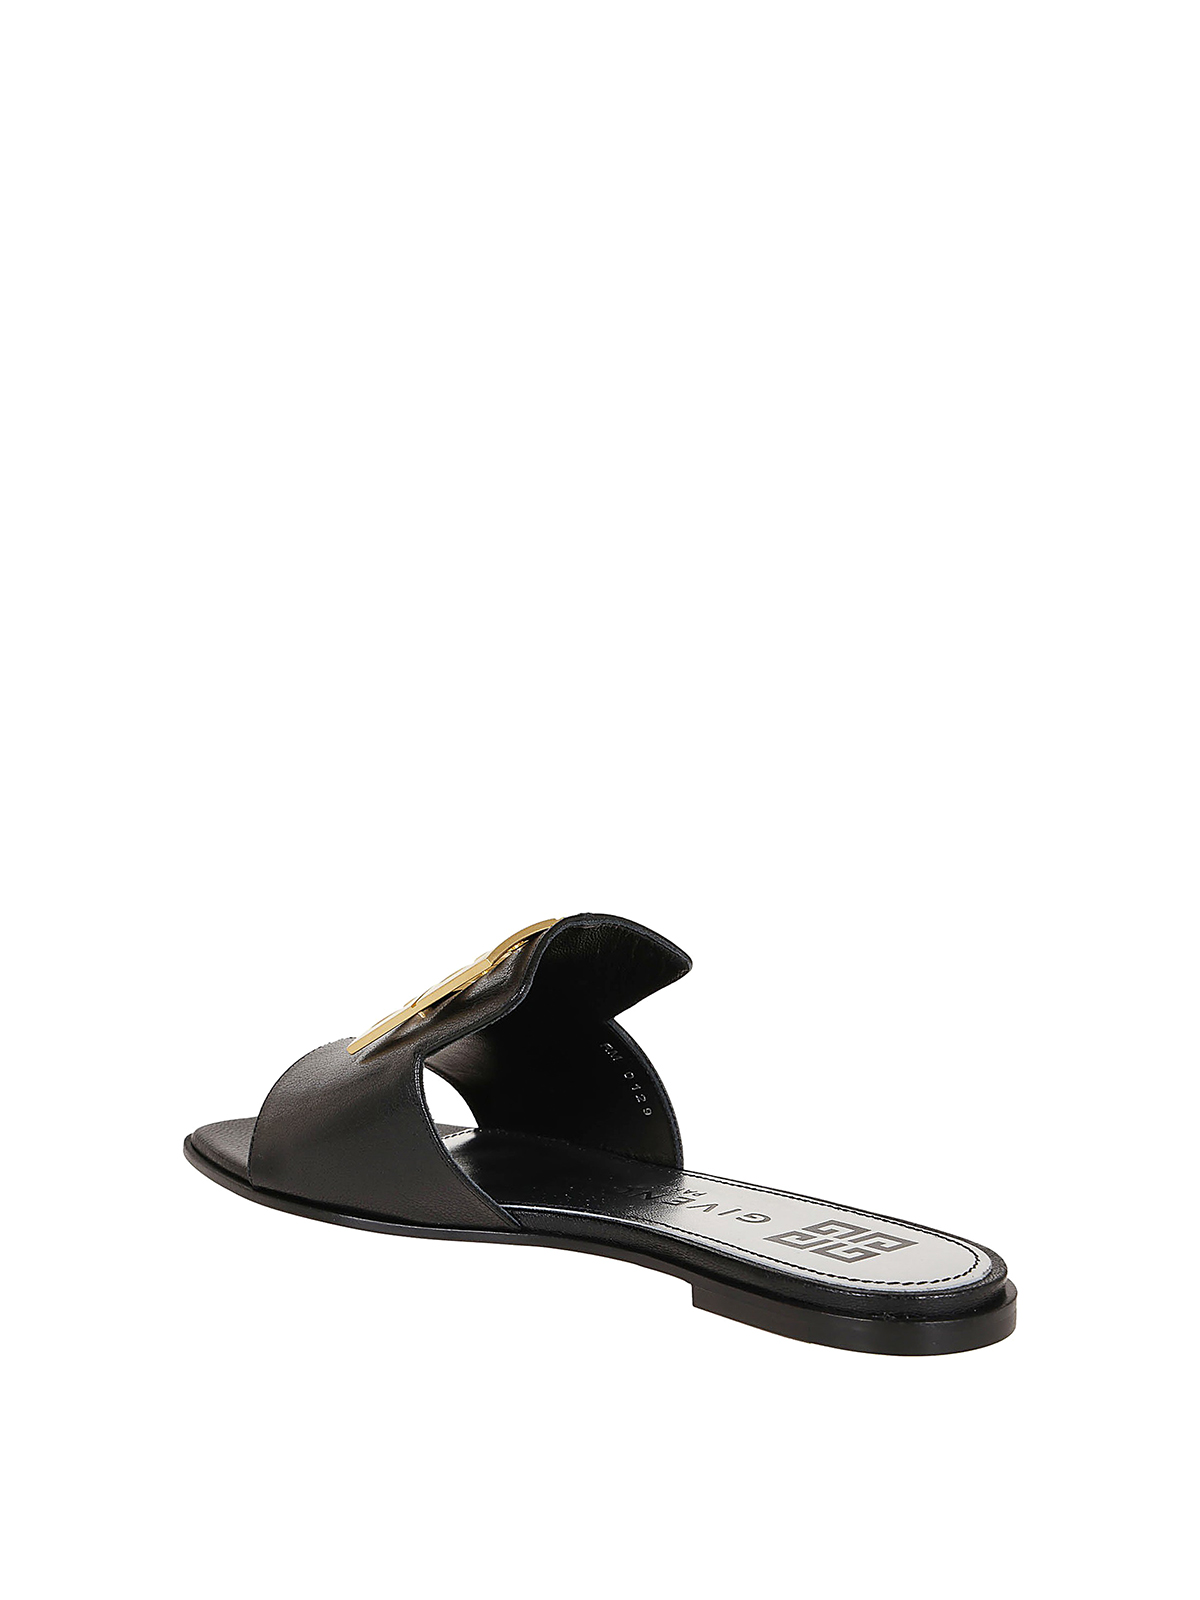 Sandals Givenchy - 4G logo leather sandals - BE303AE05V001 | iKRIX.com